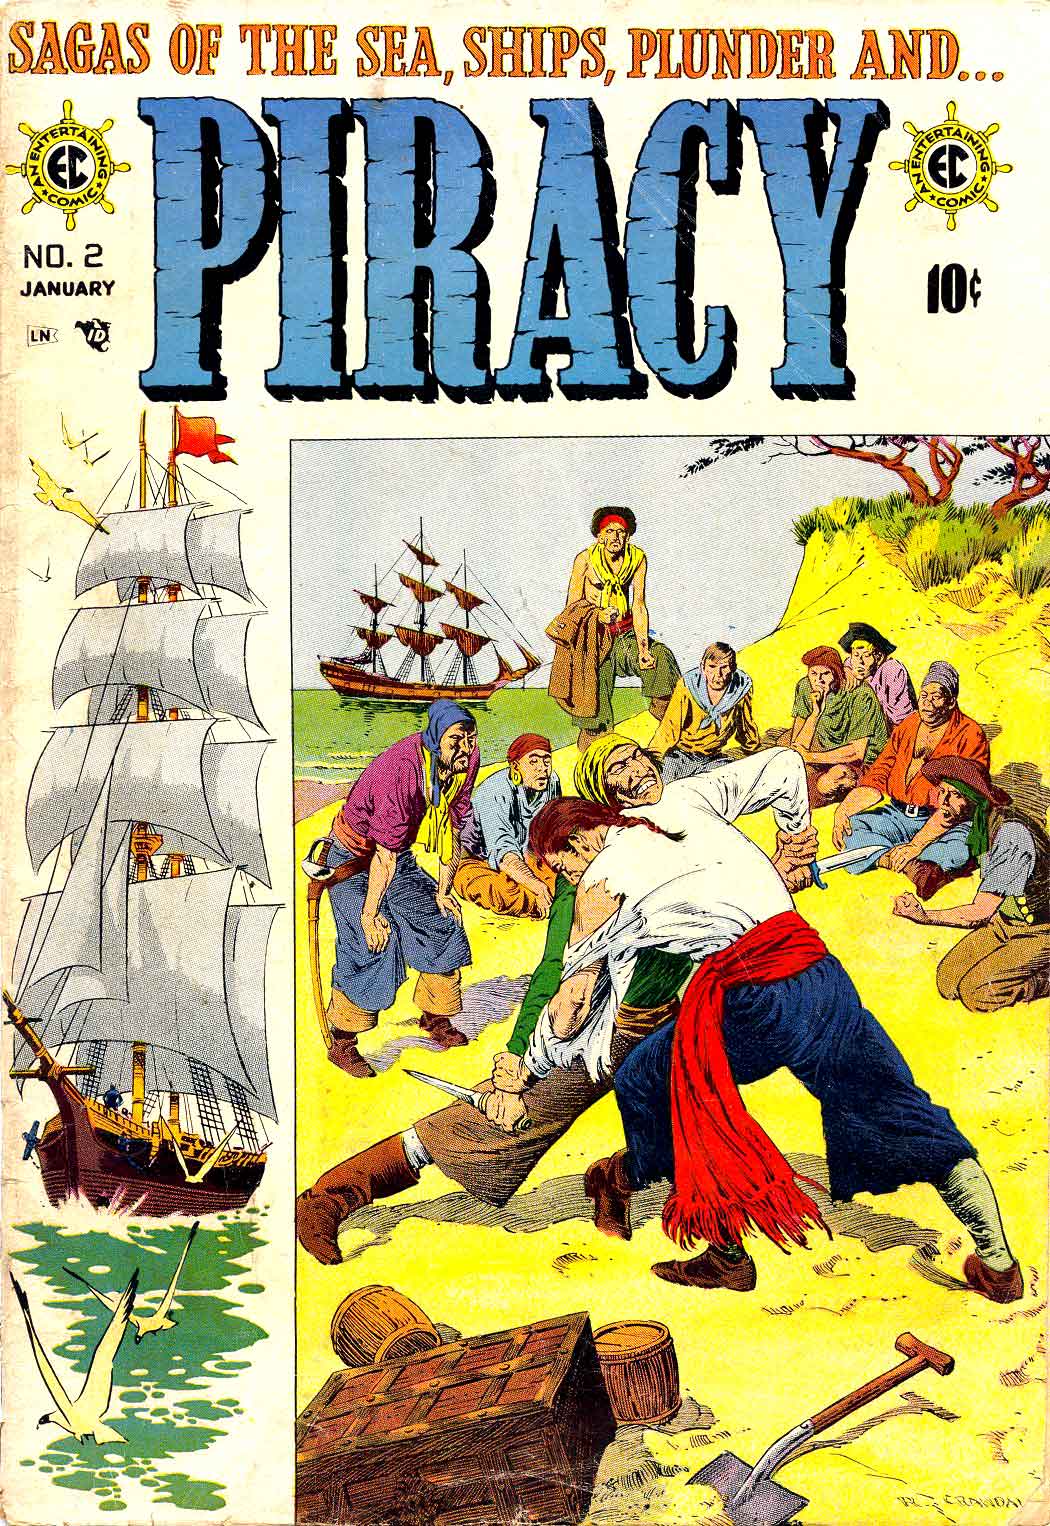 Piracy v1 #2 ec comic book cover art by Reed Crandall